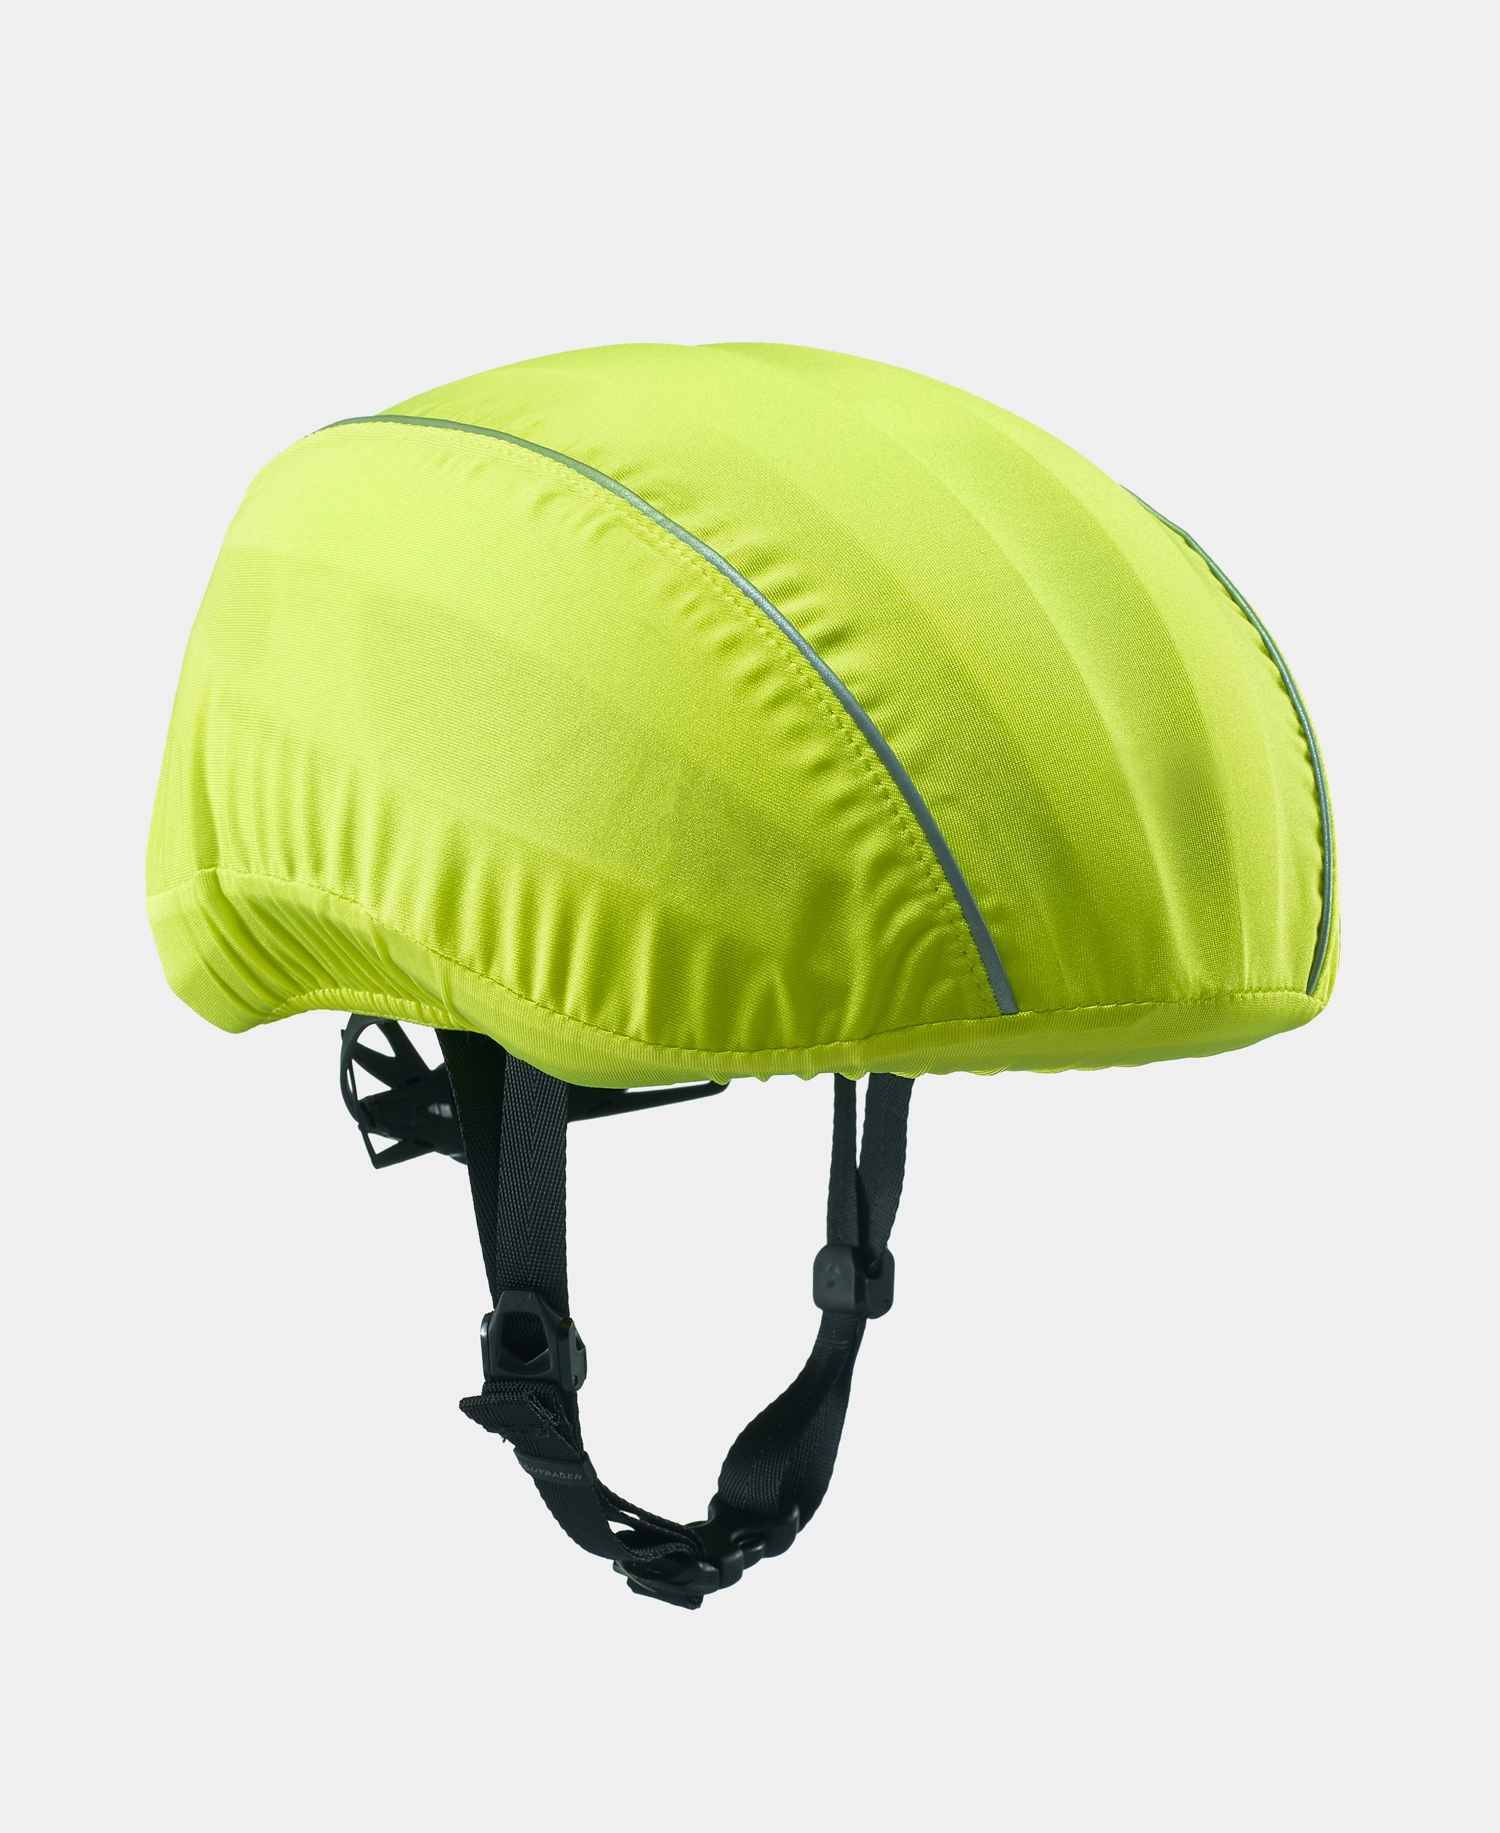 bike helmet attachments